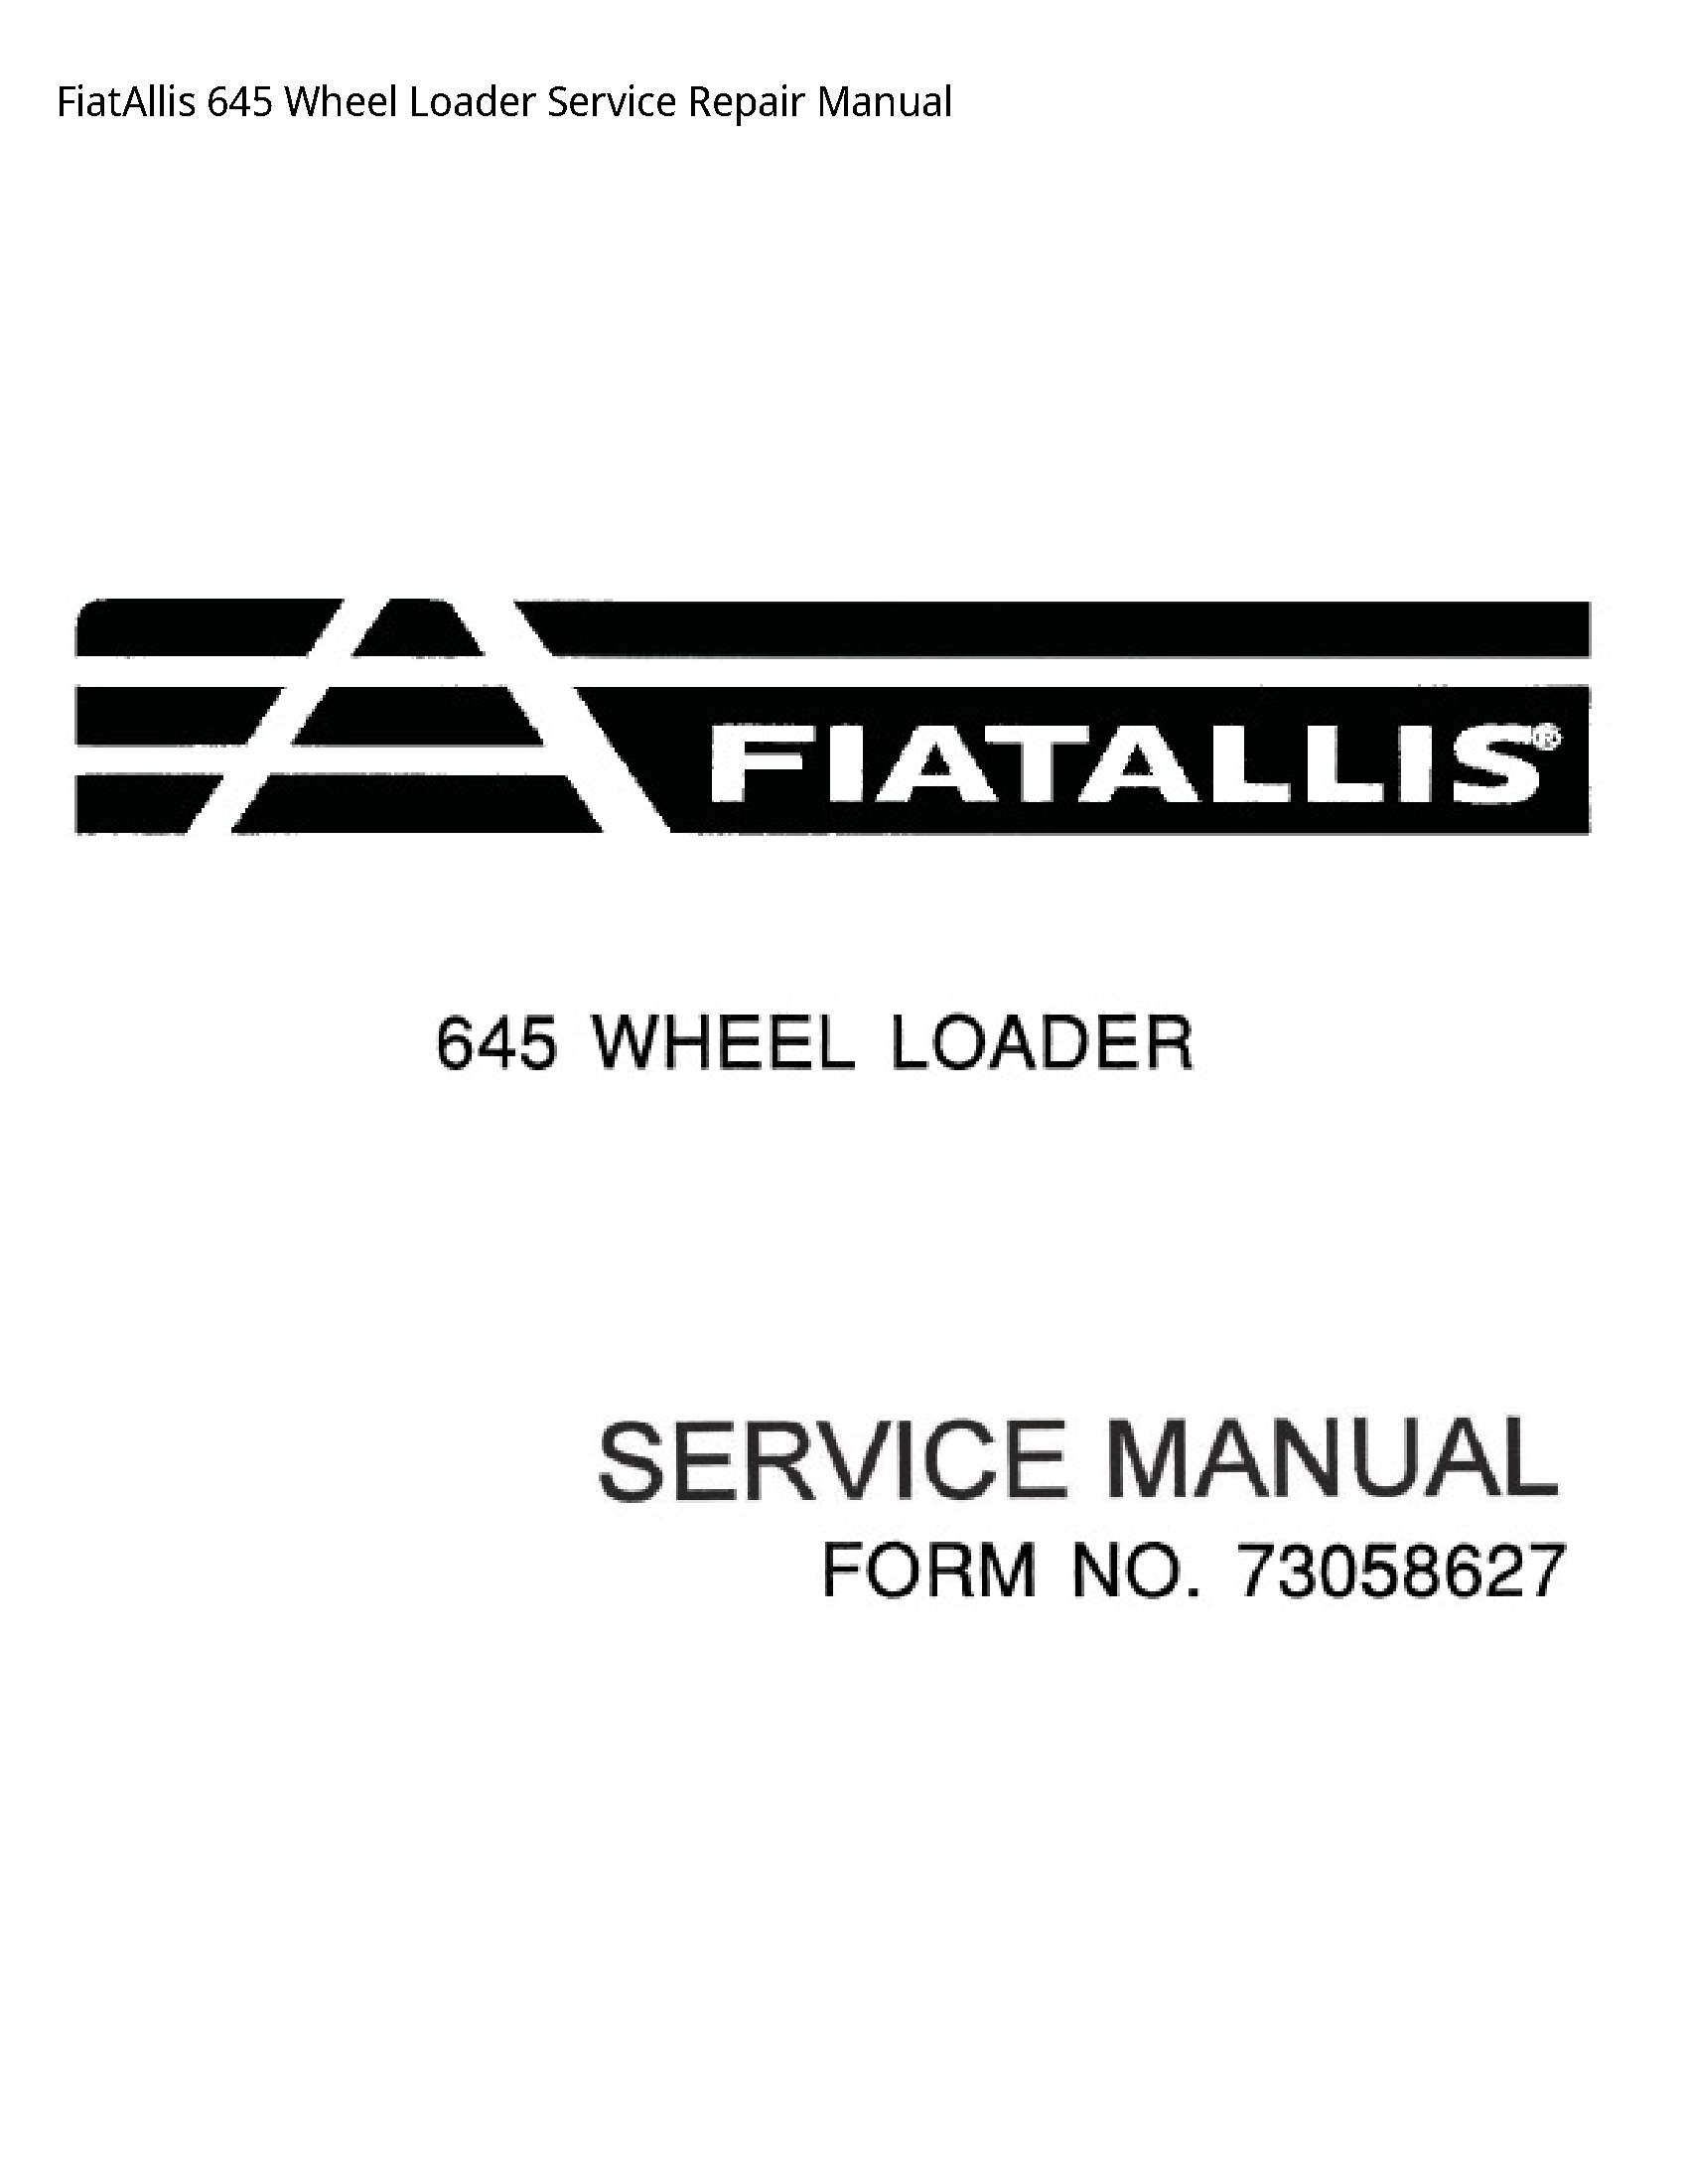 Fiatallis 645 Wheel Loader manual